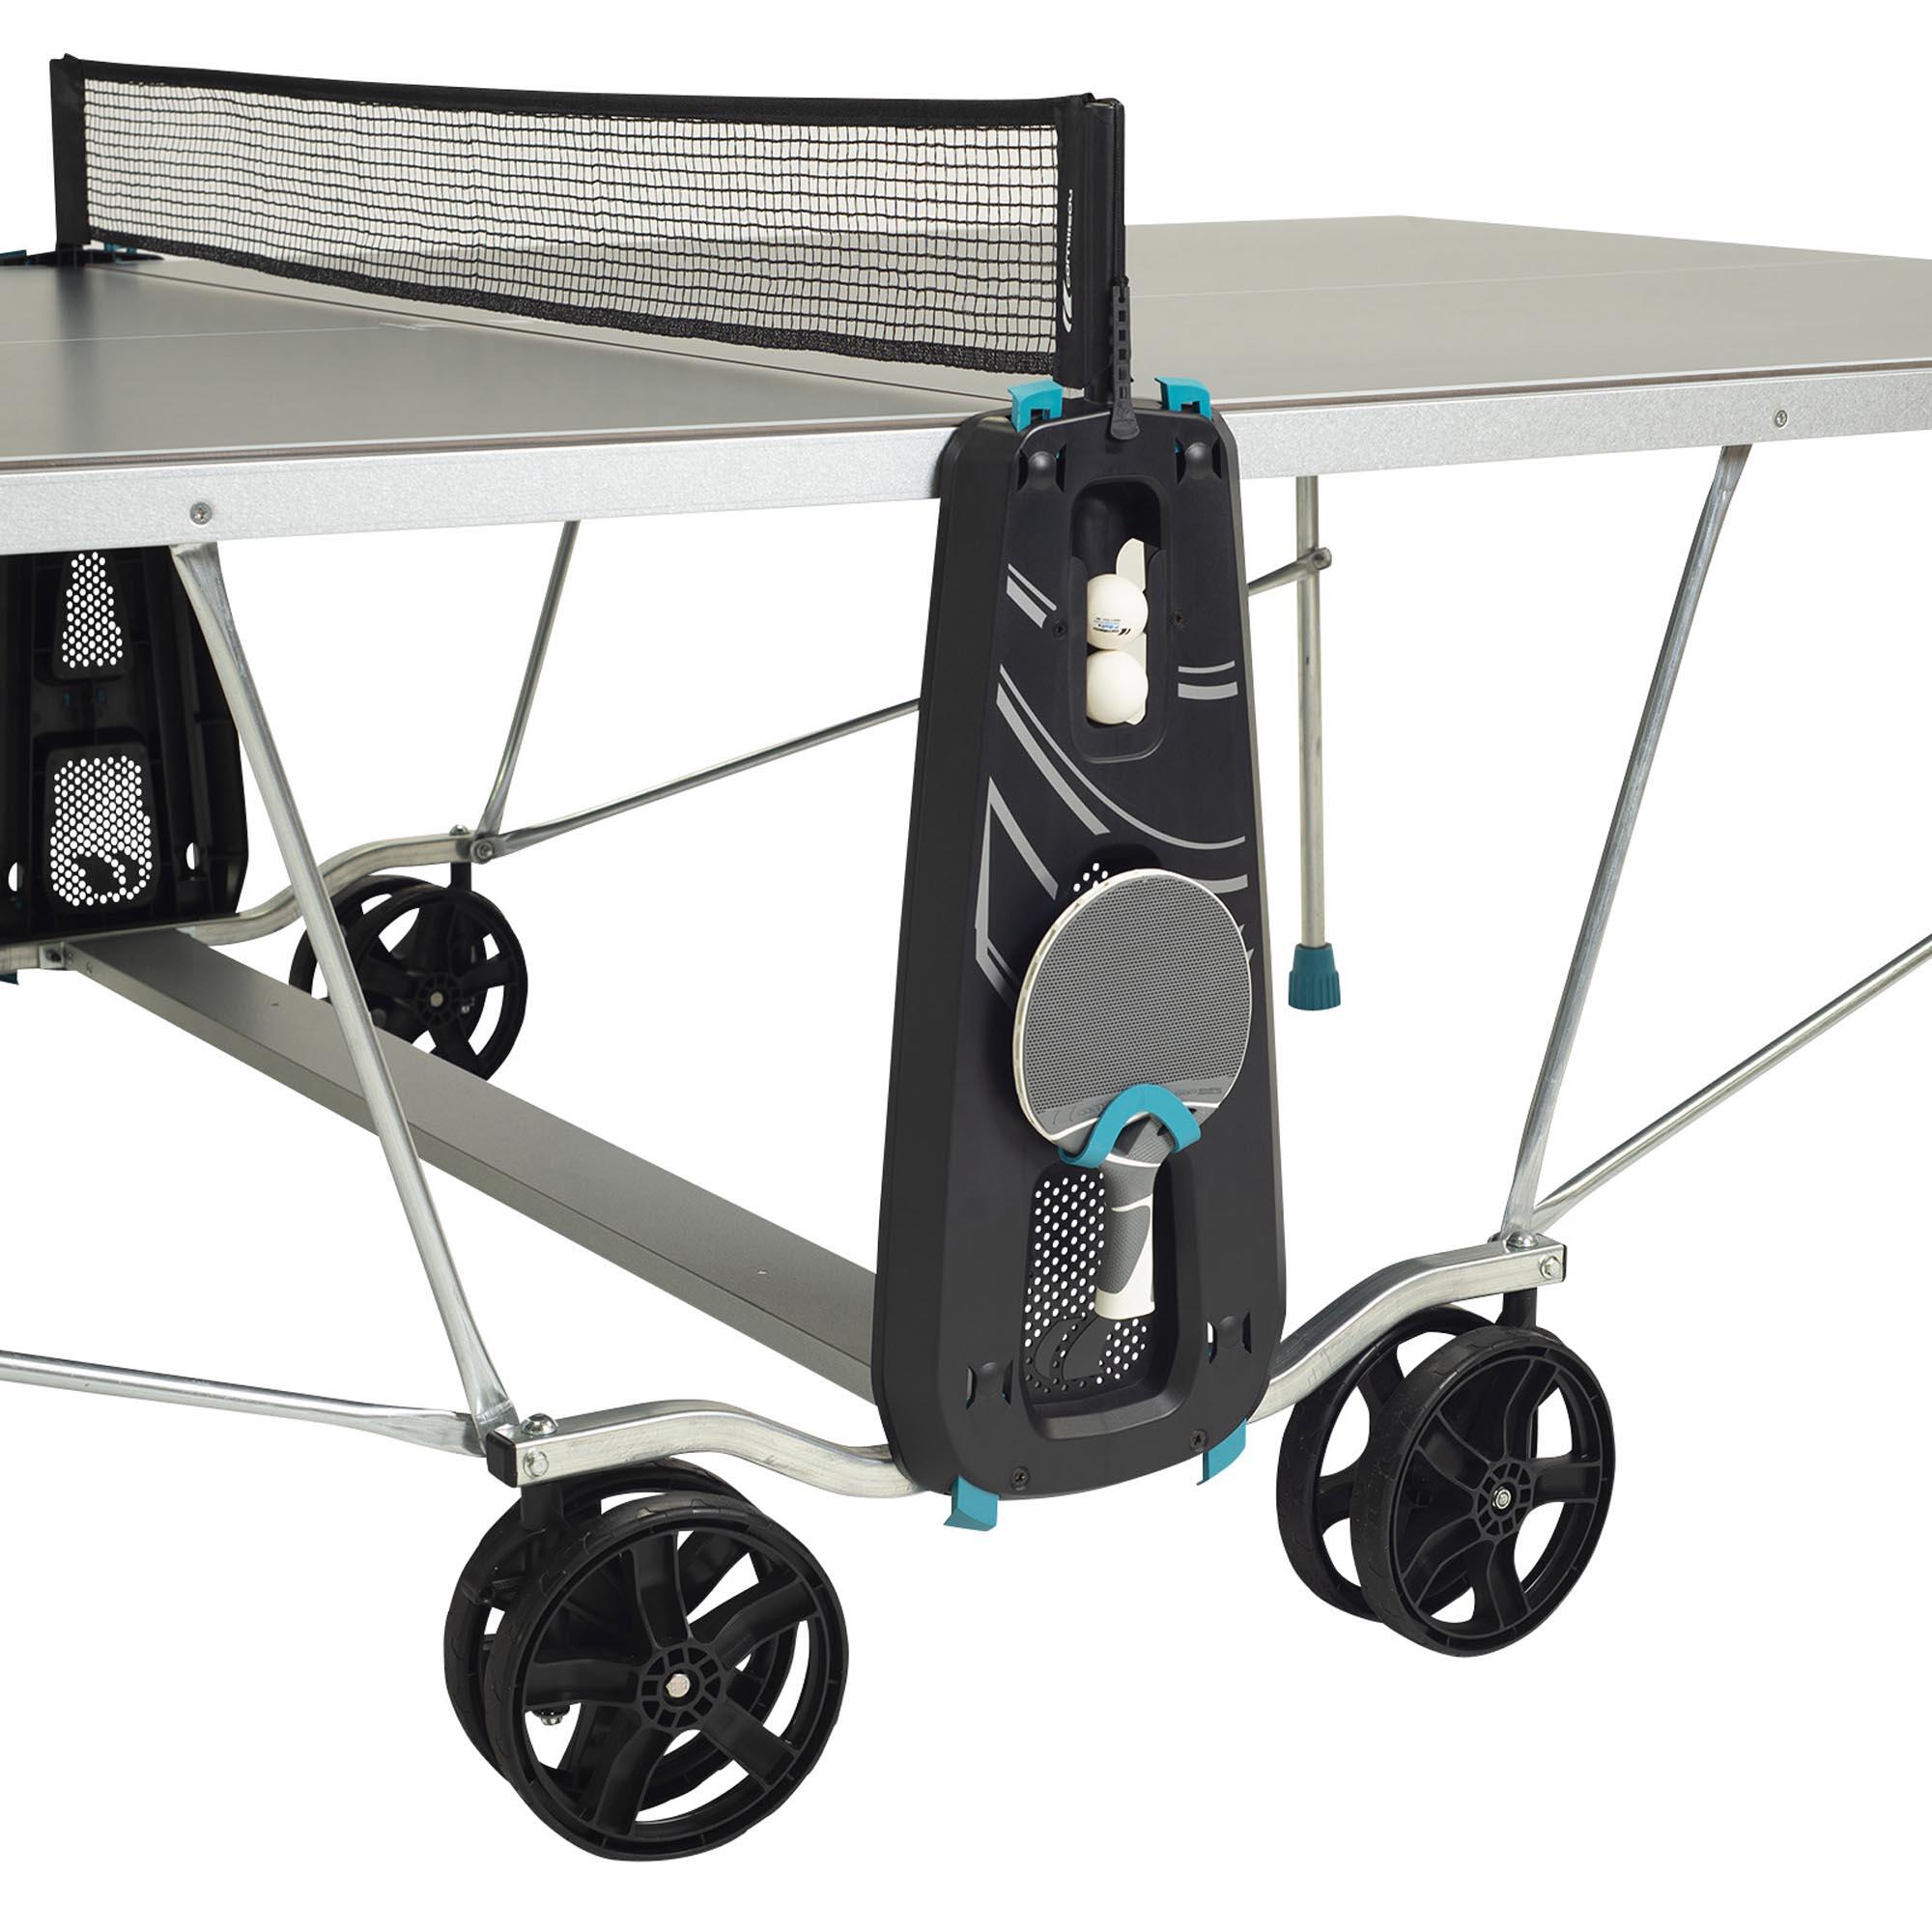 Outdoor Table Tennis Table 100X - Grey 6/14